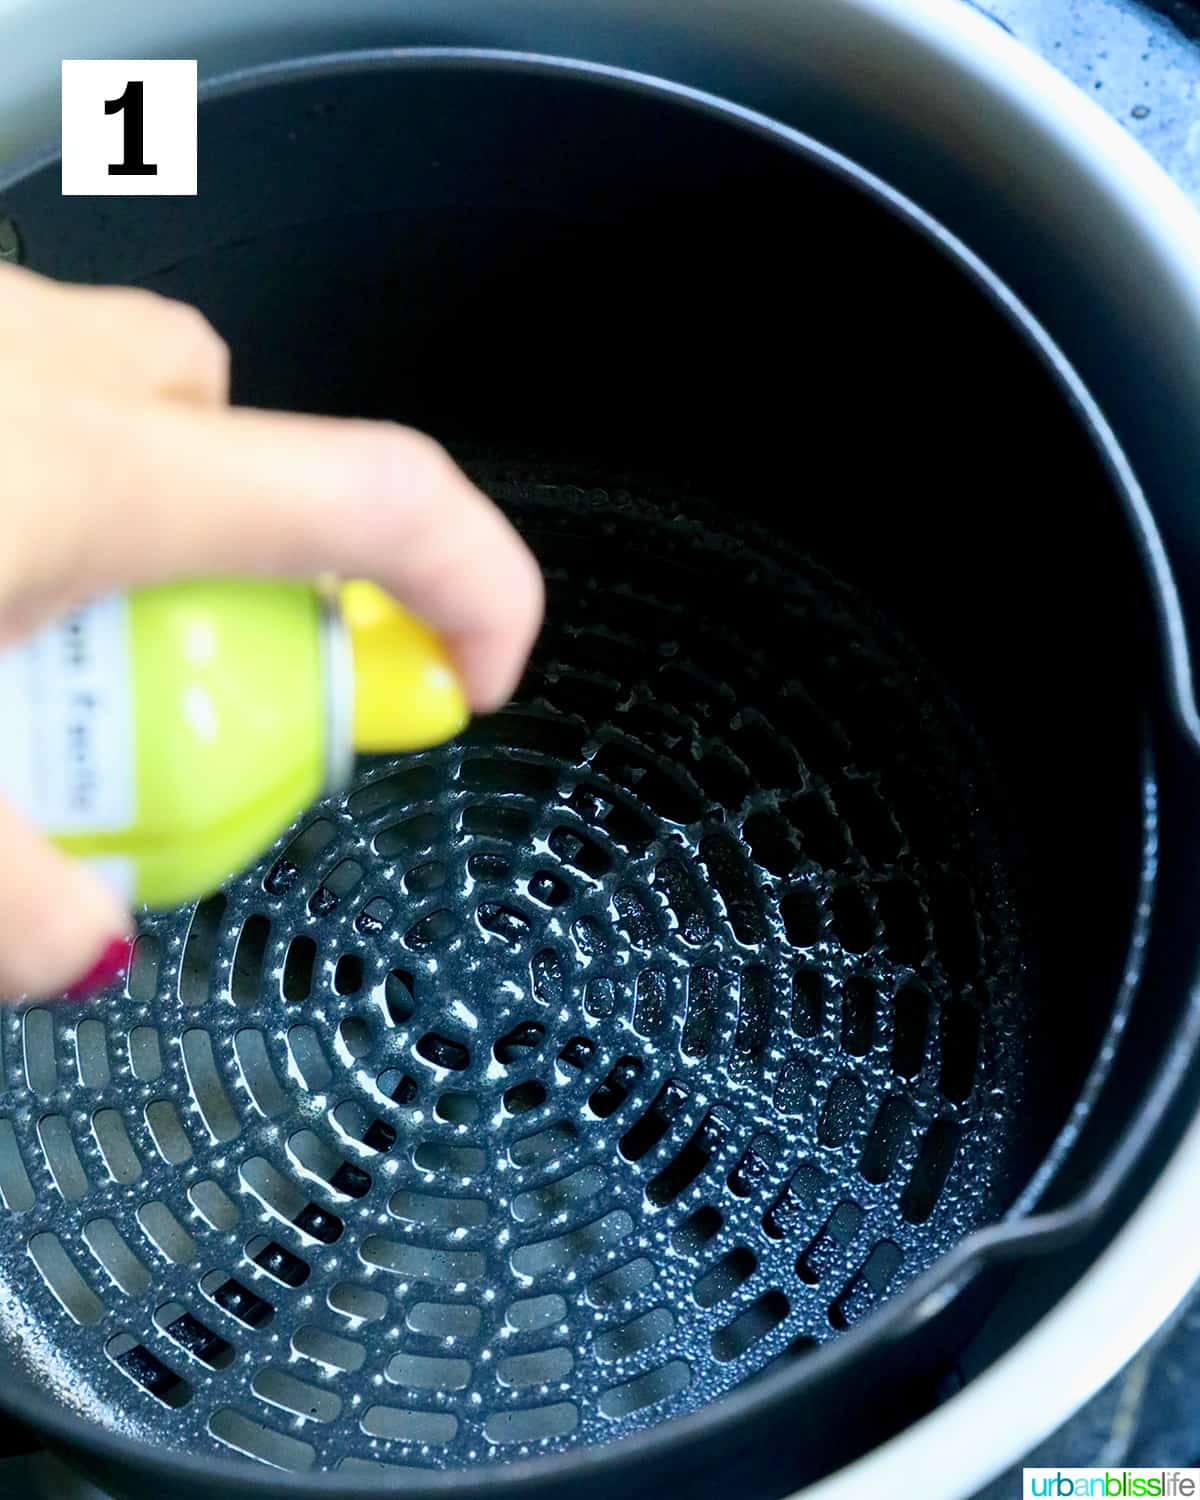 spraying air fryer basket with olive oil spray.